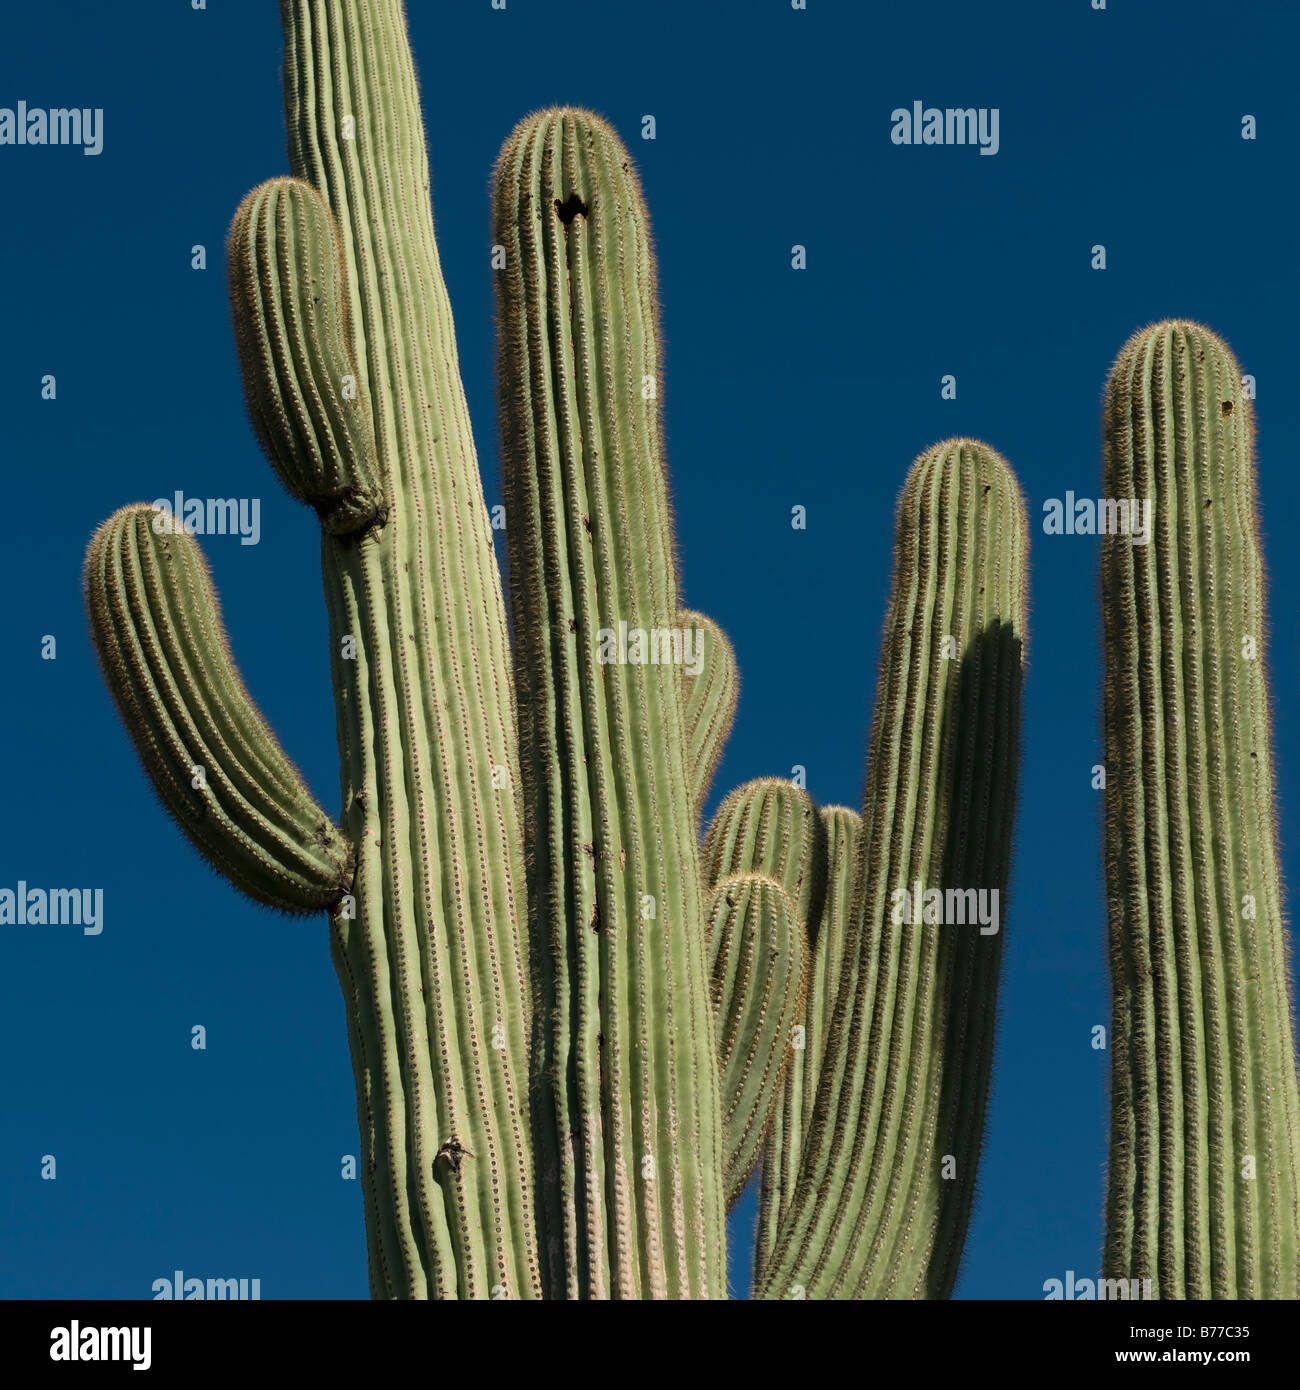 Cactus against blue sky Stock Photo